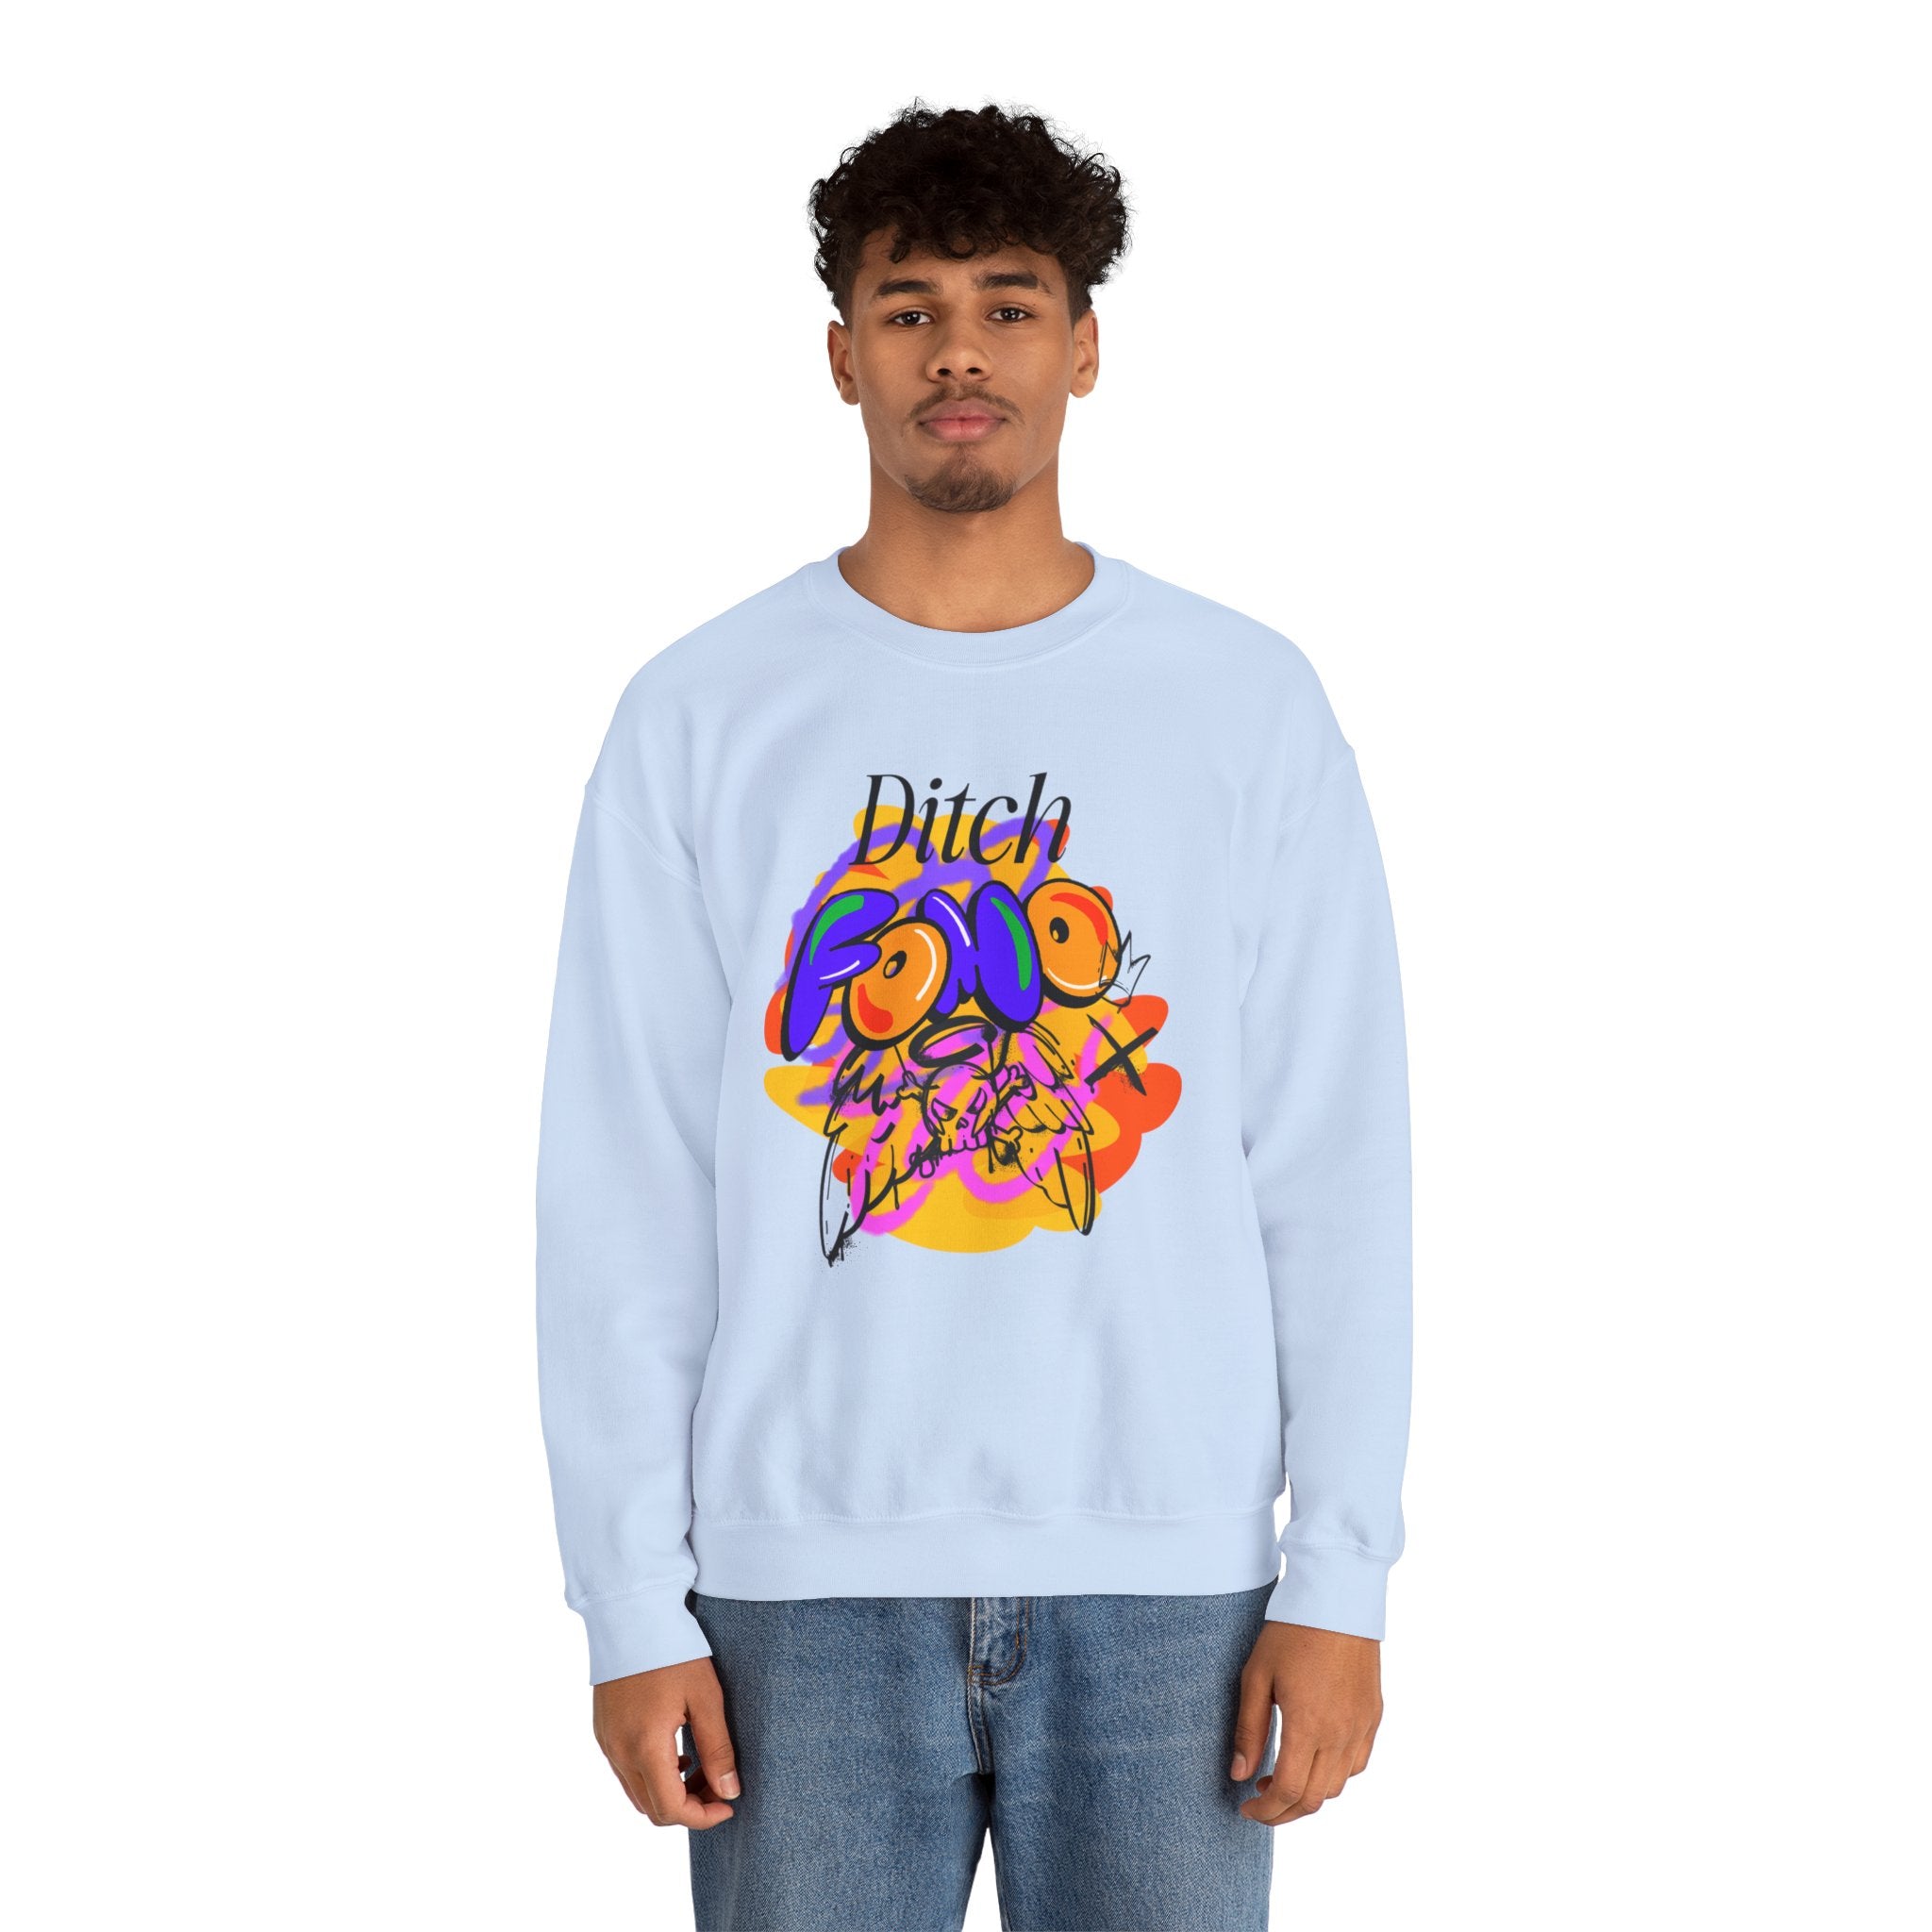 Ditch FOMO Sweater